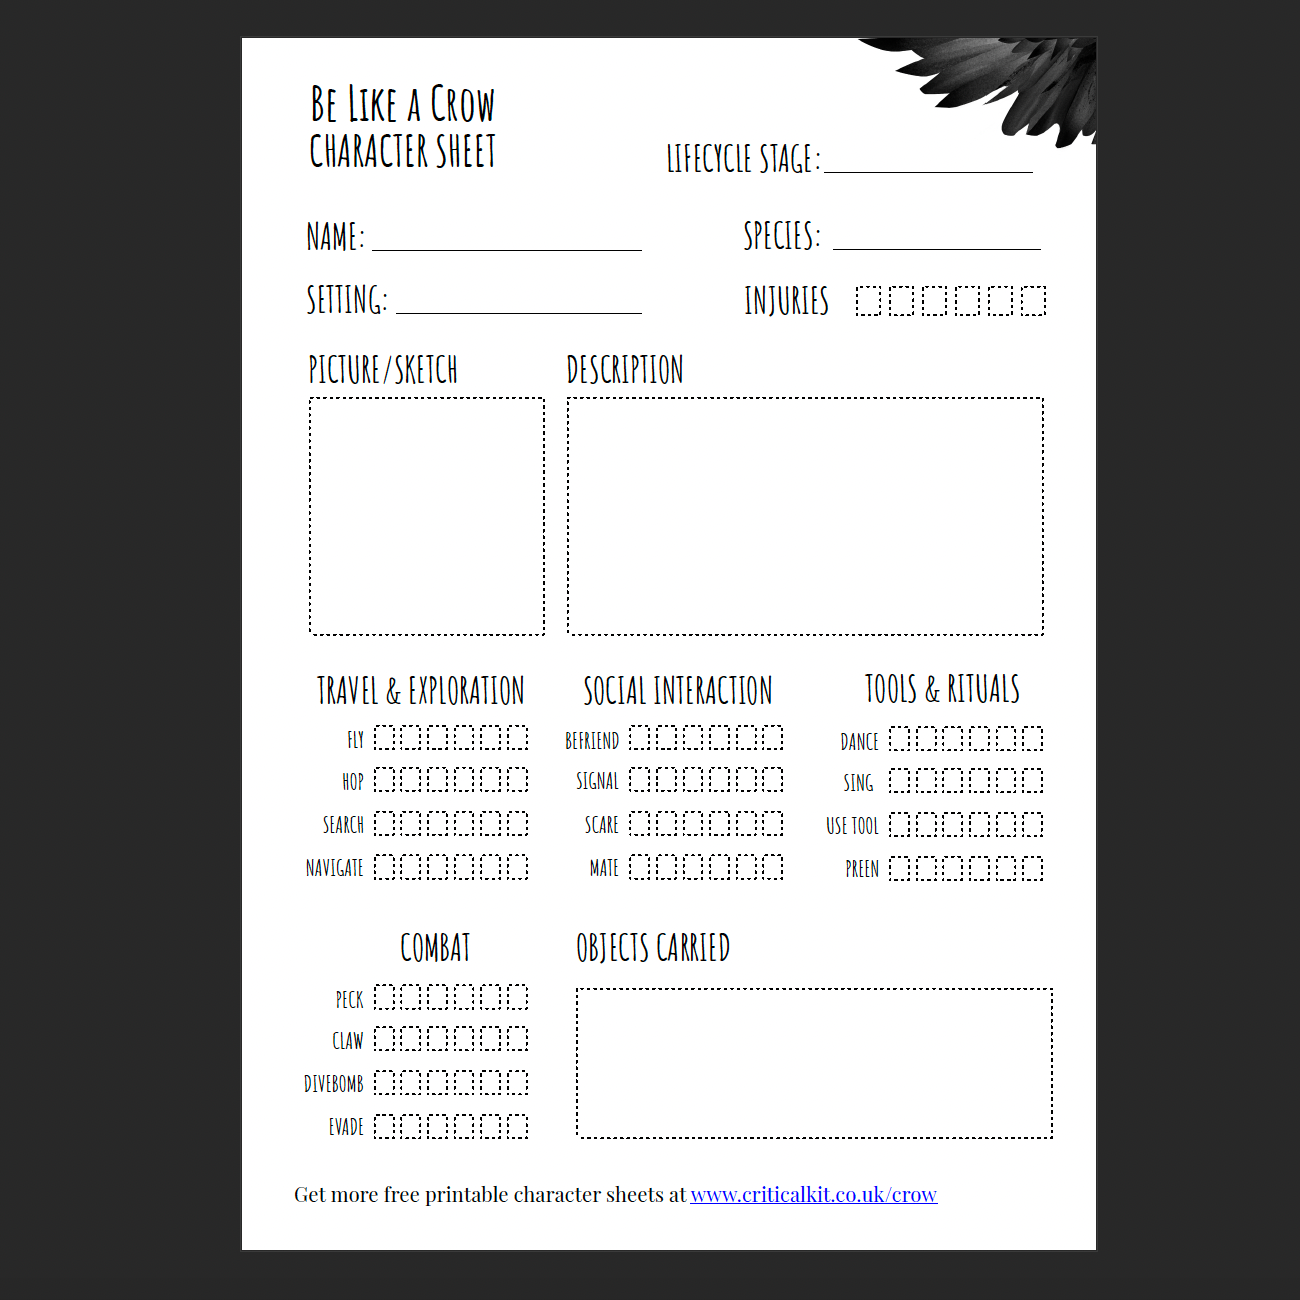 Be Like a Crow - Character Sheet (FREE)